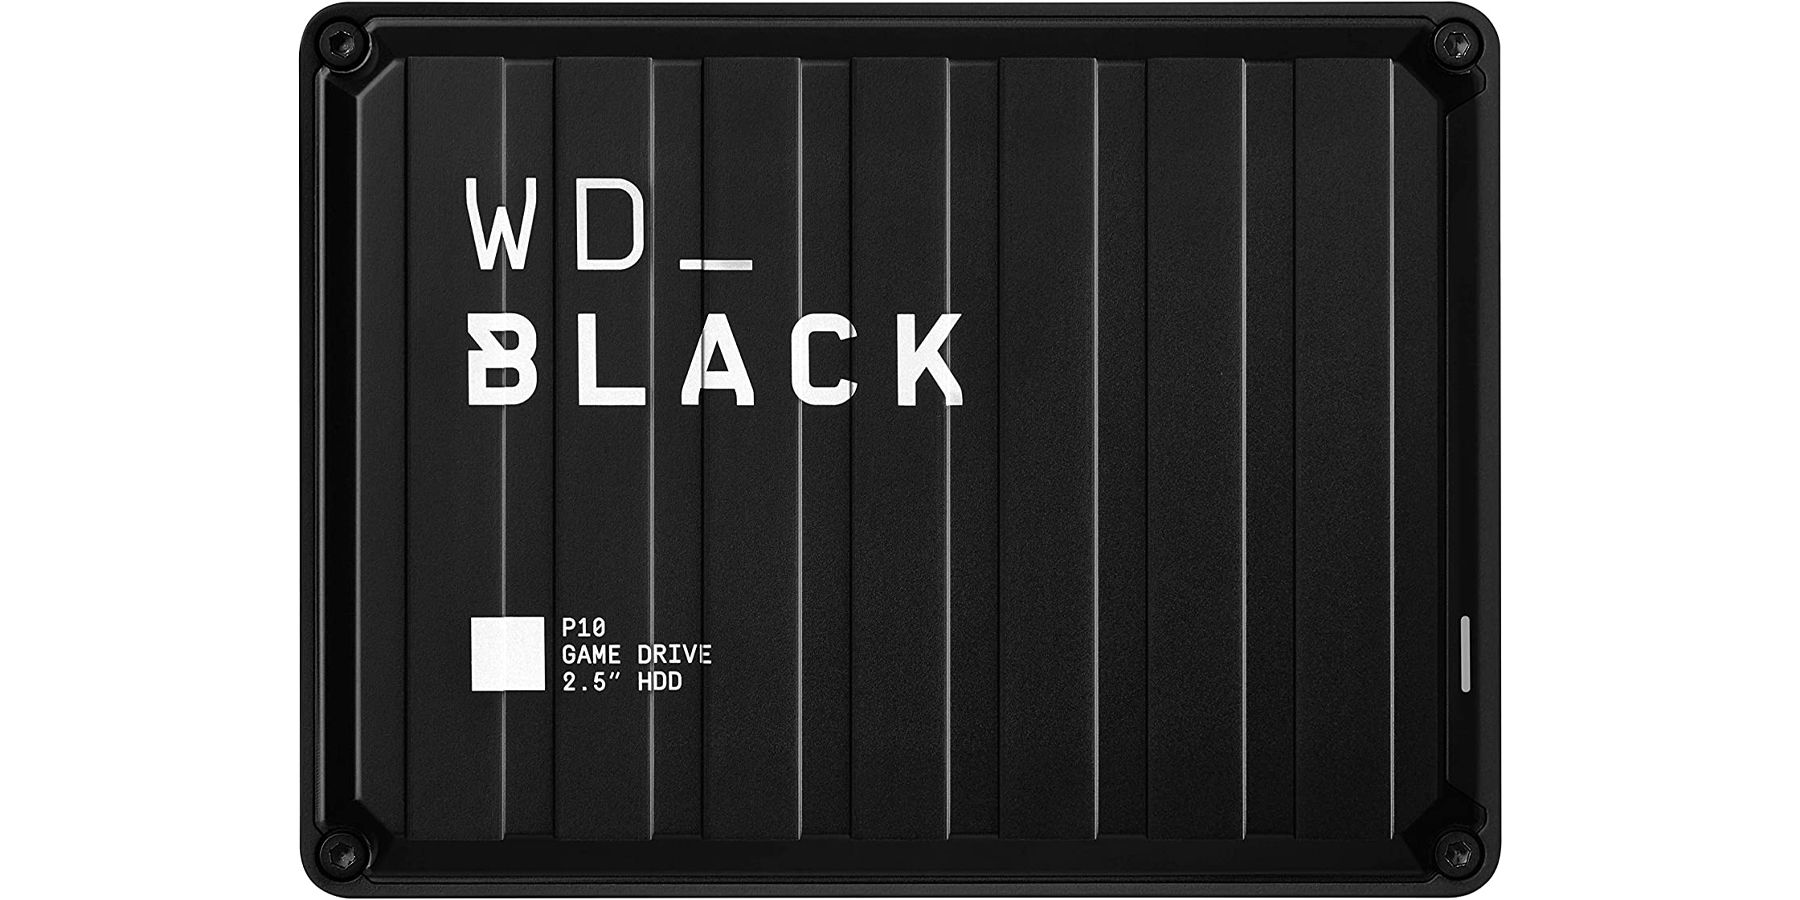 WD_BLACK 5TB P10 Game Drive